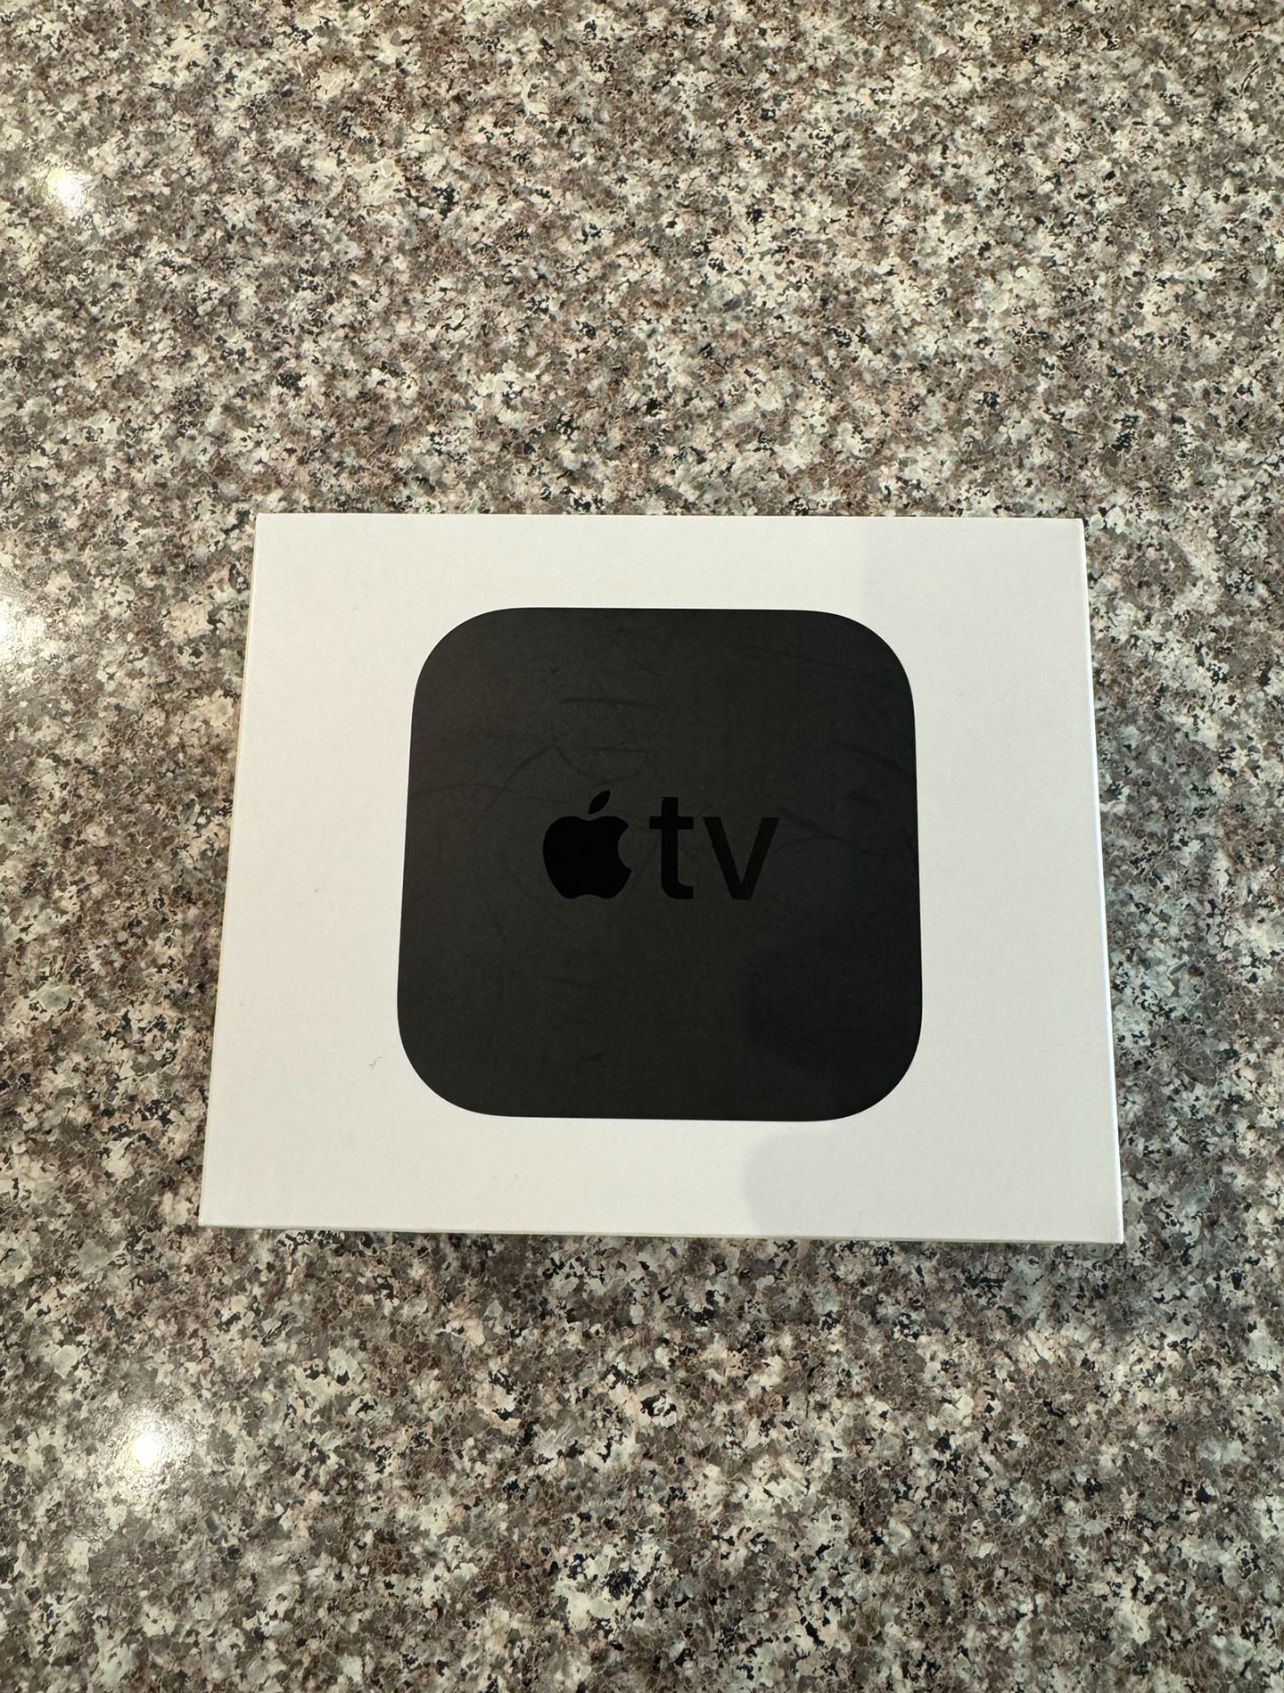 Apple Tv Box 